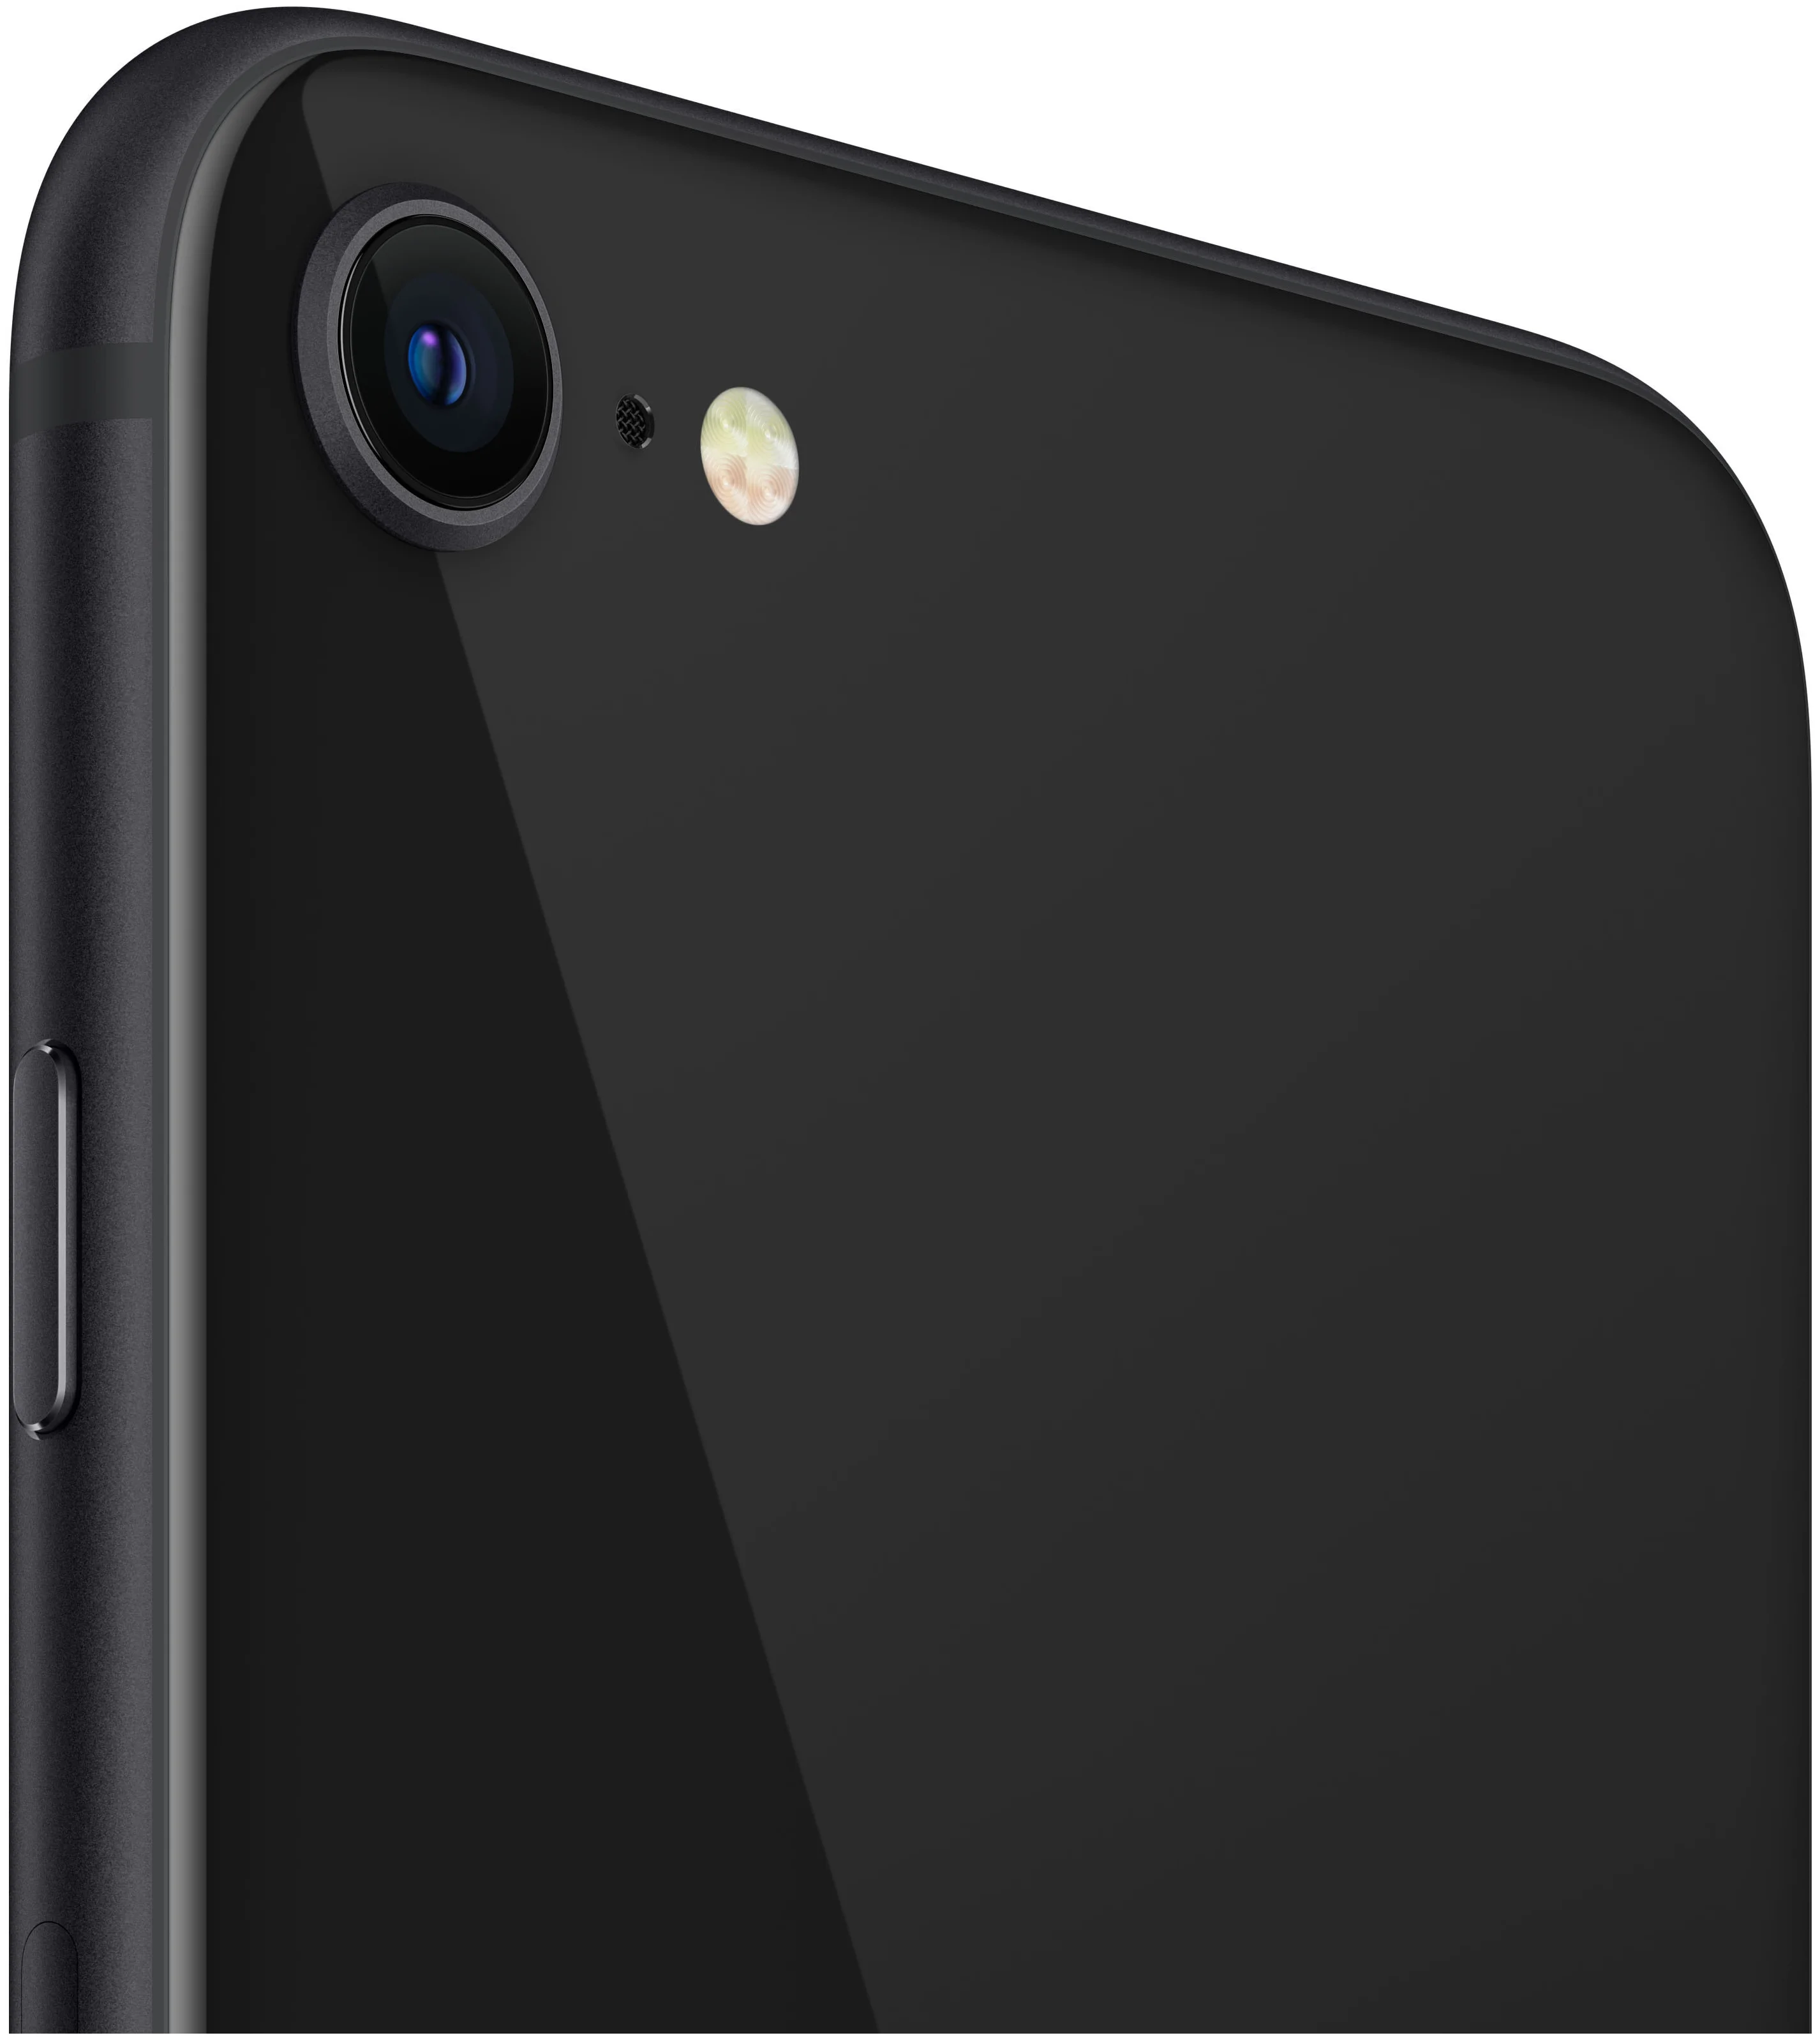 Apple iPhone SE 2020 128GB - интернет: 4G LTE